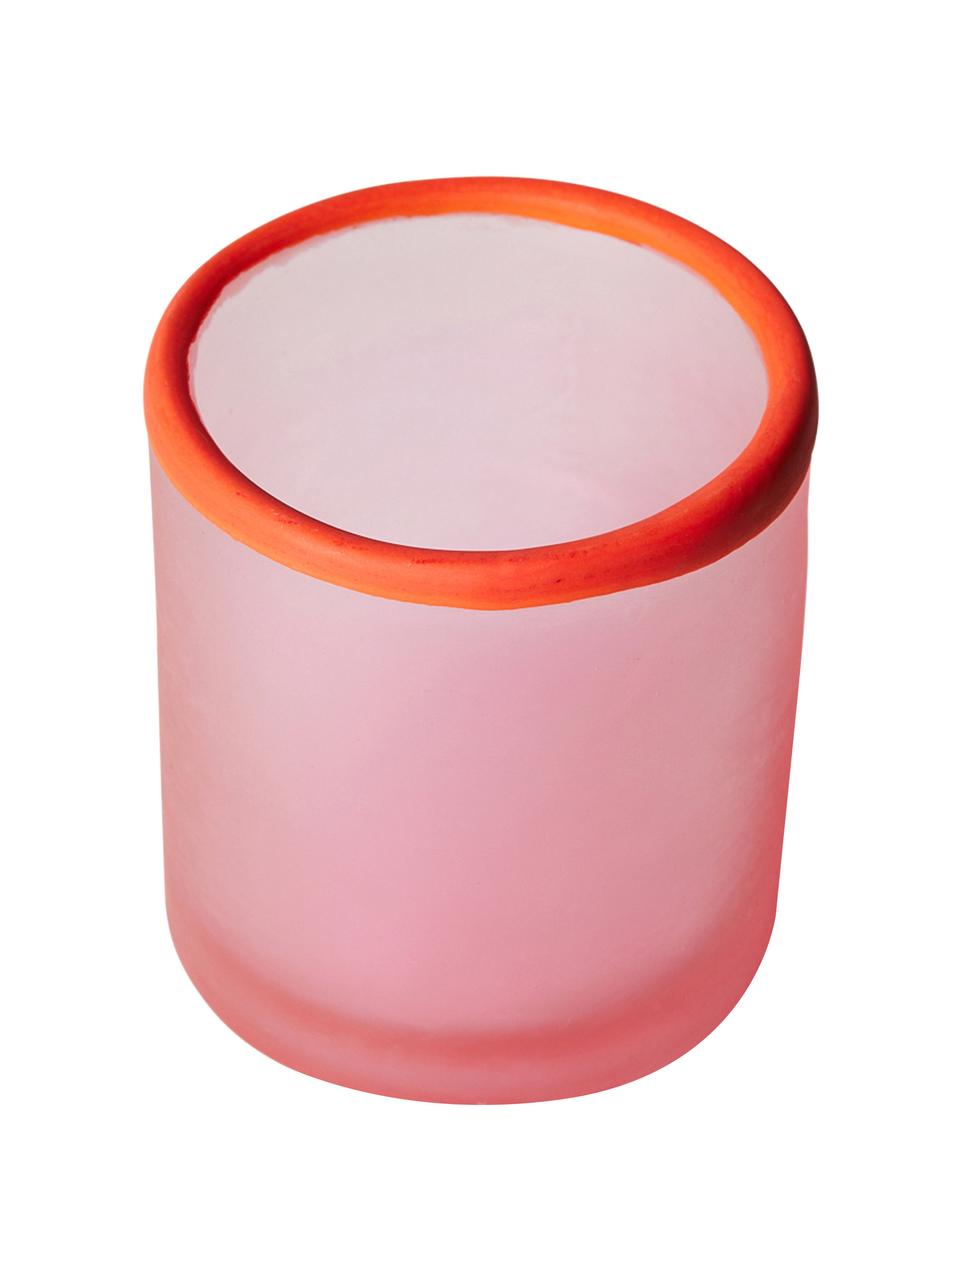 Waxinelichthouder Pastel, Glas, Rood, roze, Ø 9 x H 10 cm